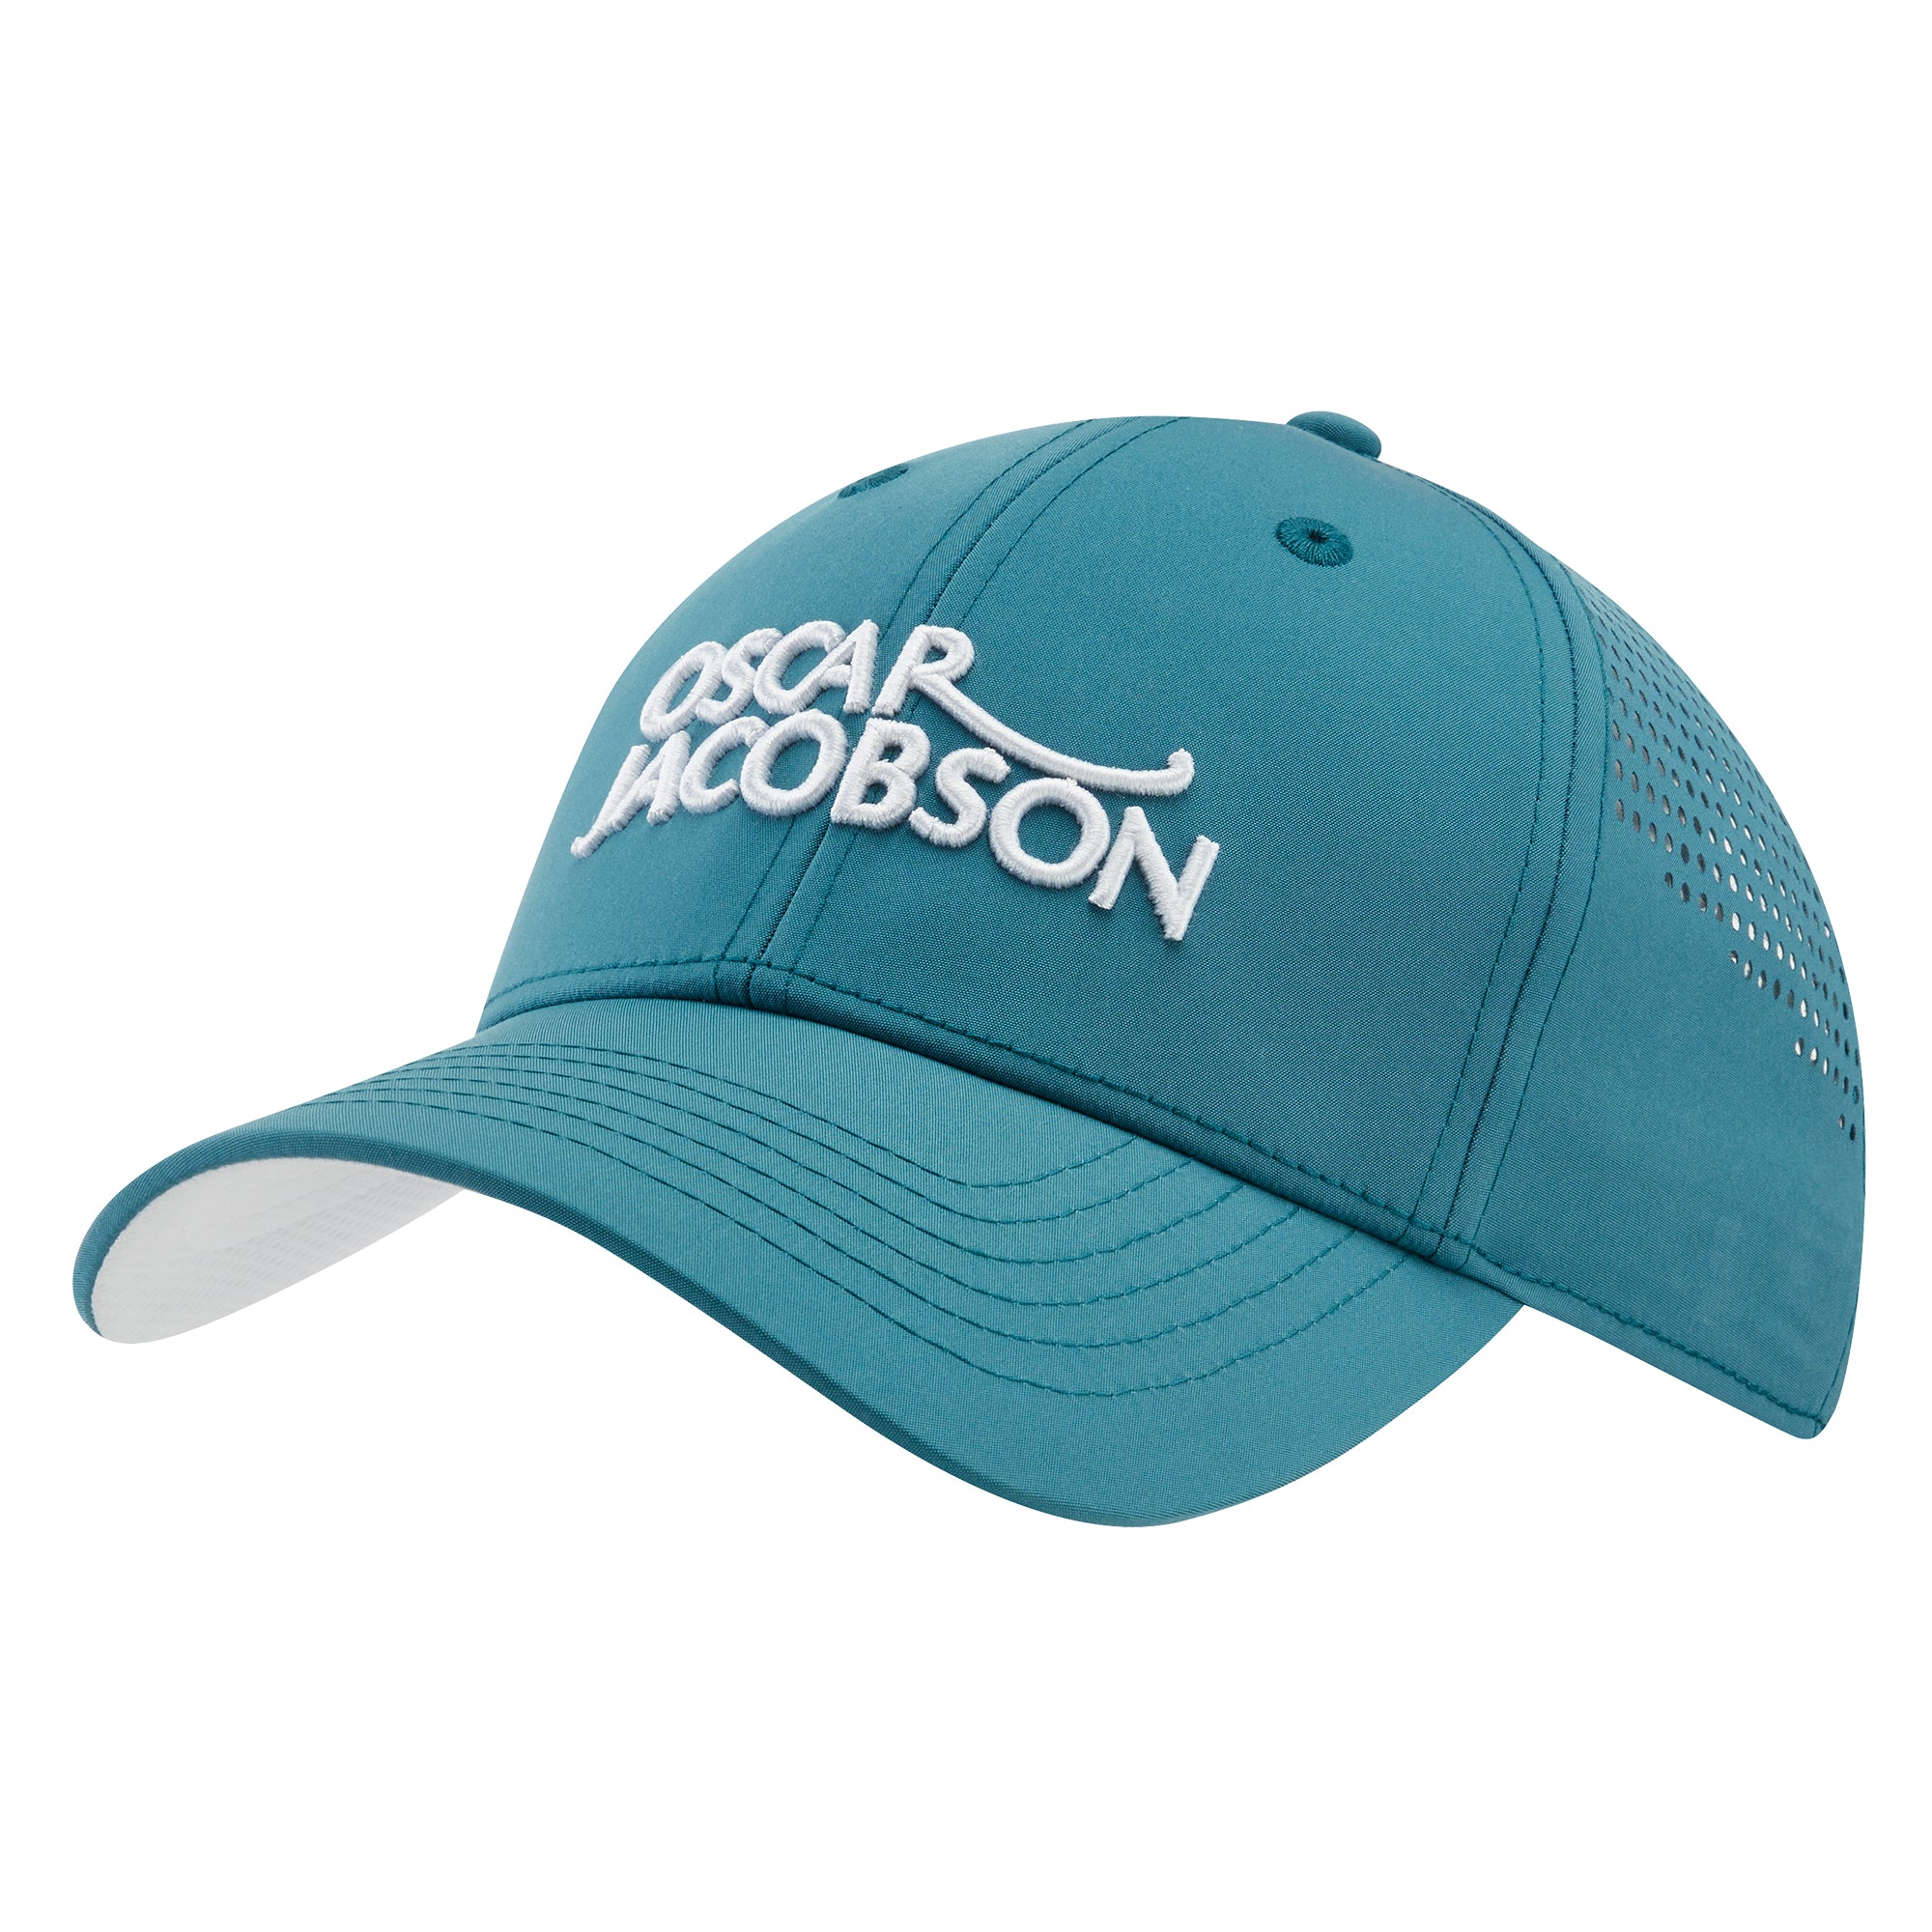 oscar-jacobson-maddox-golf-cap-ojcap0003-teal